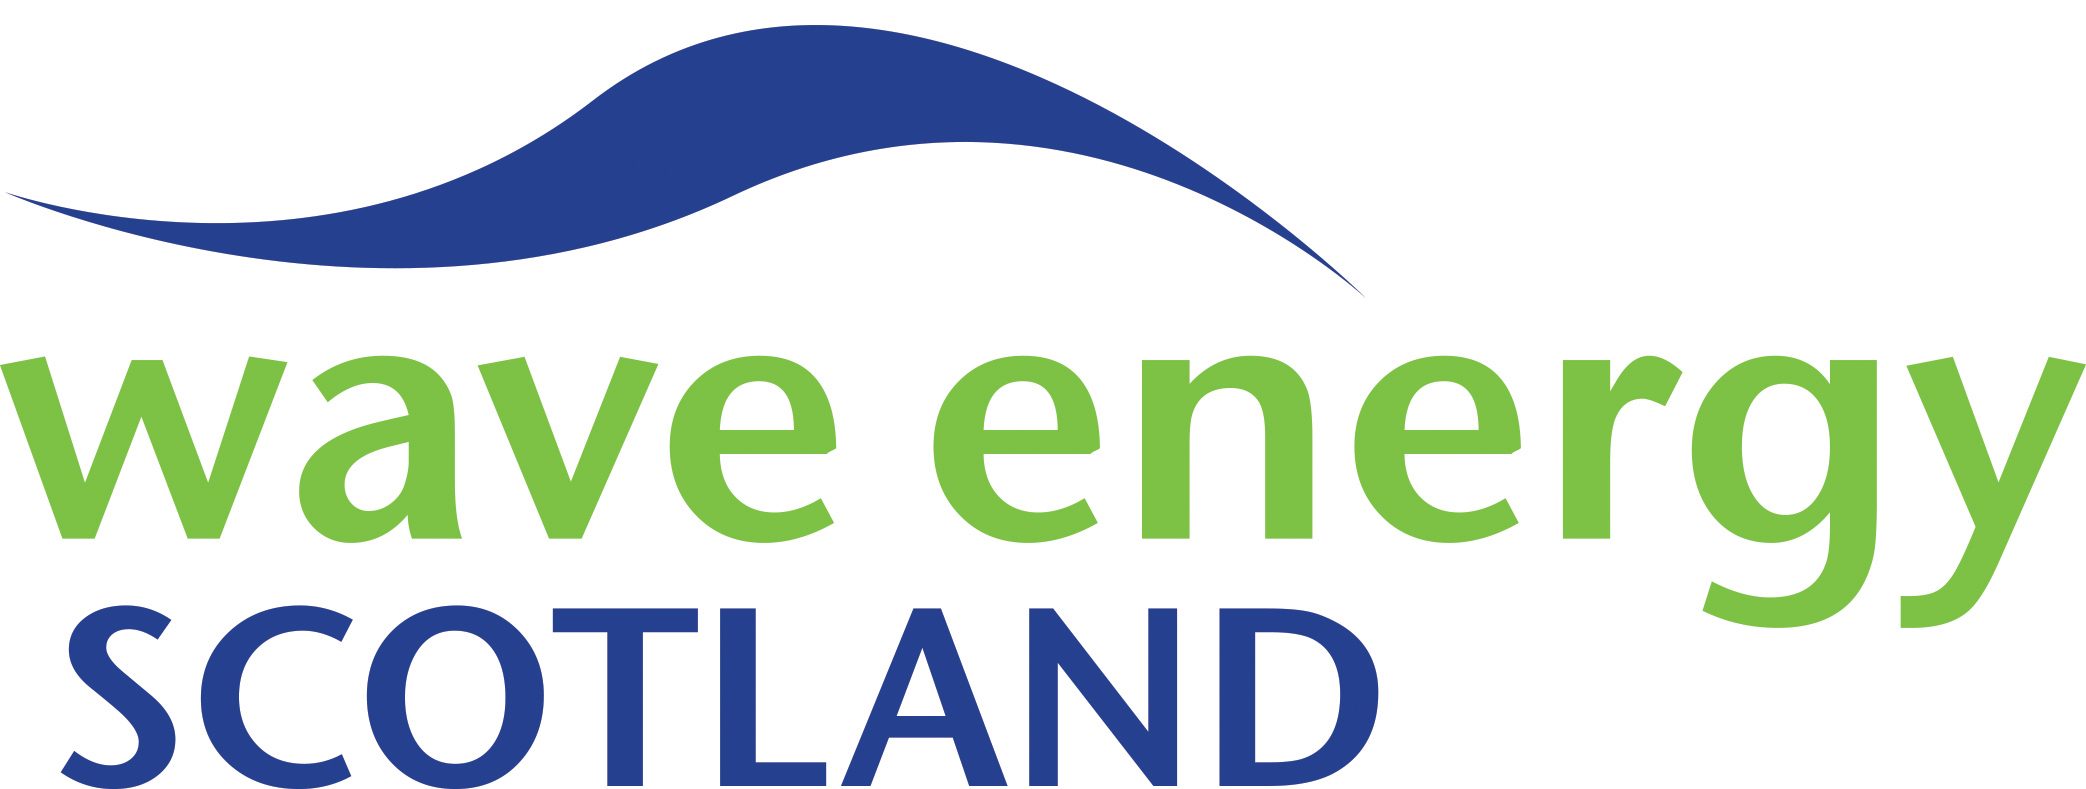 OceanSET partner - Wave Energy Scotland (WES)